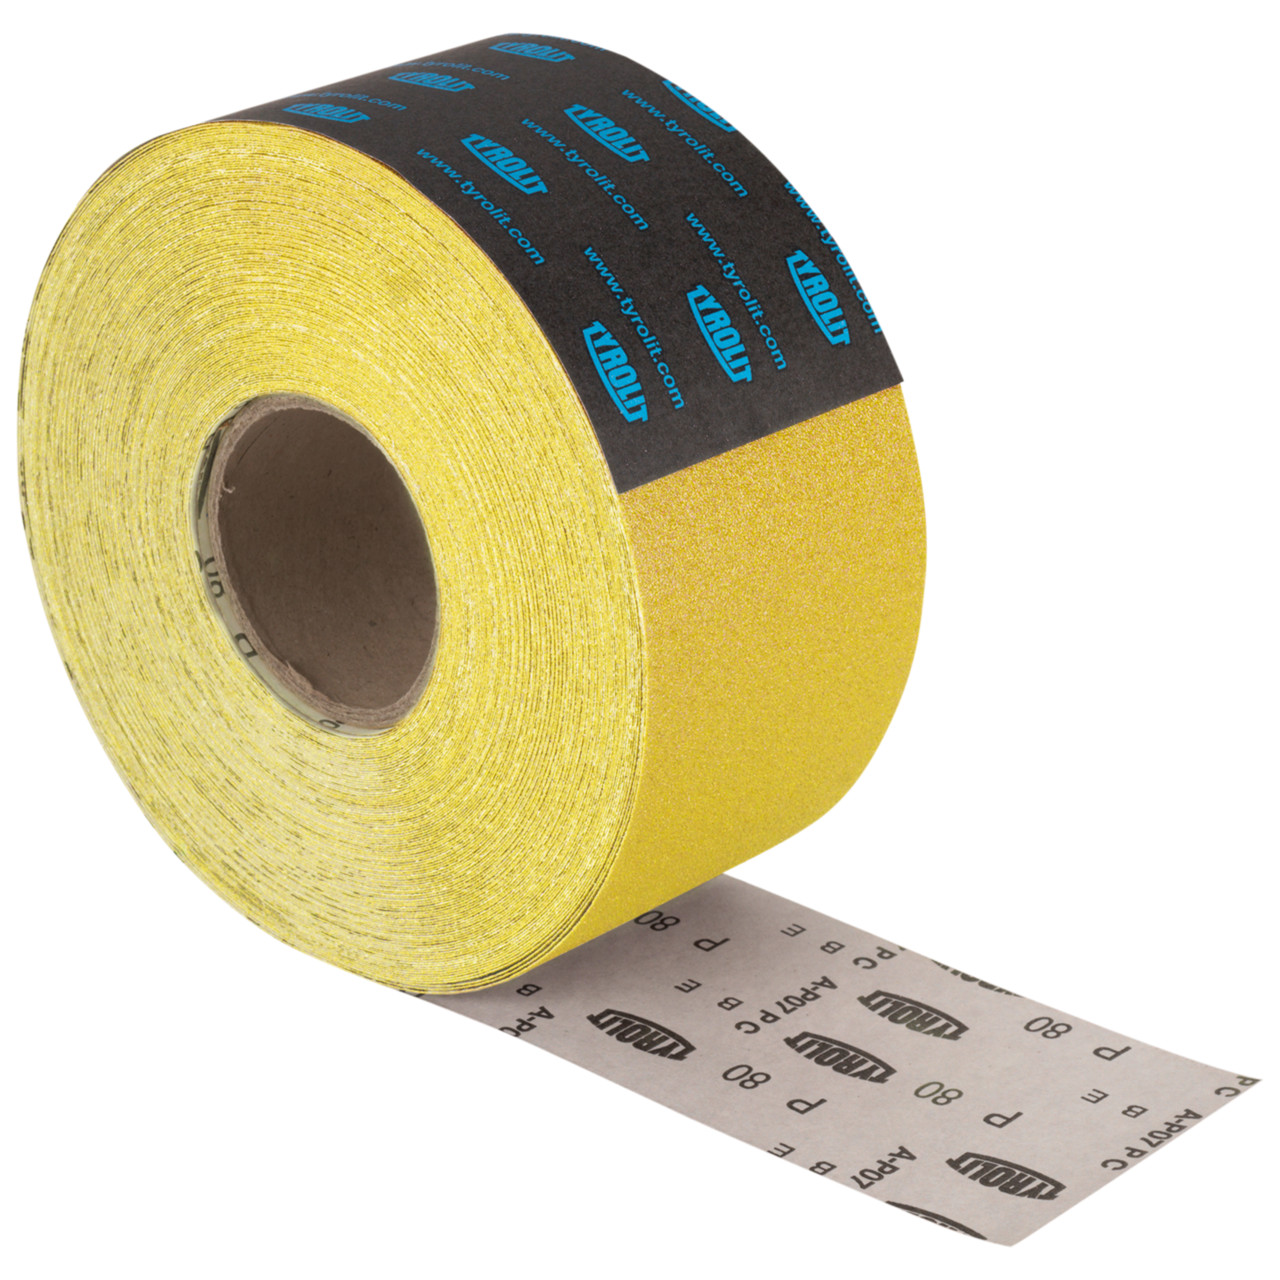 TYROLIT A-P21 D Paper rolls TxH 115x5 For plastic, wood, paint and varnish, P180, shape: ROLL, Art. 34231876